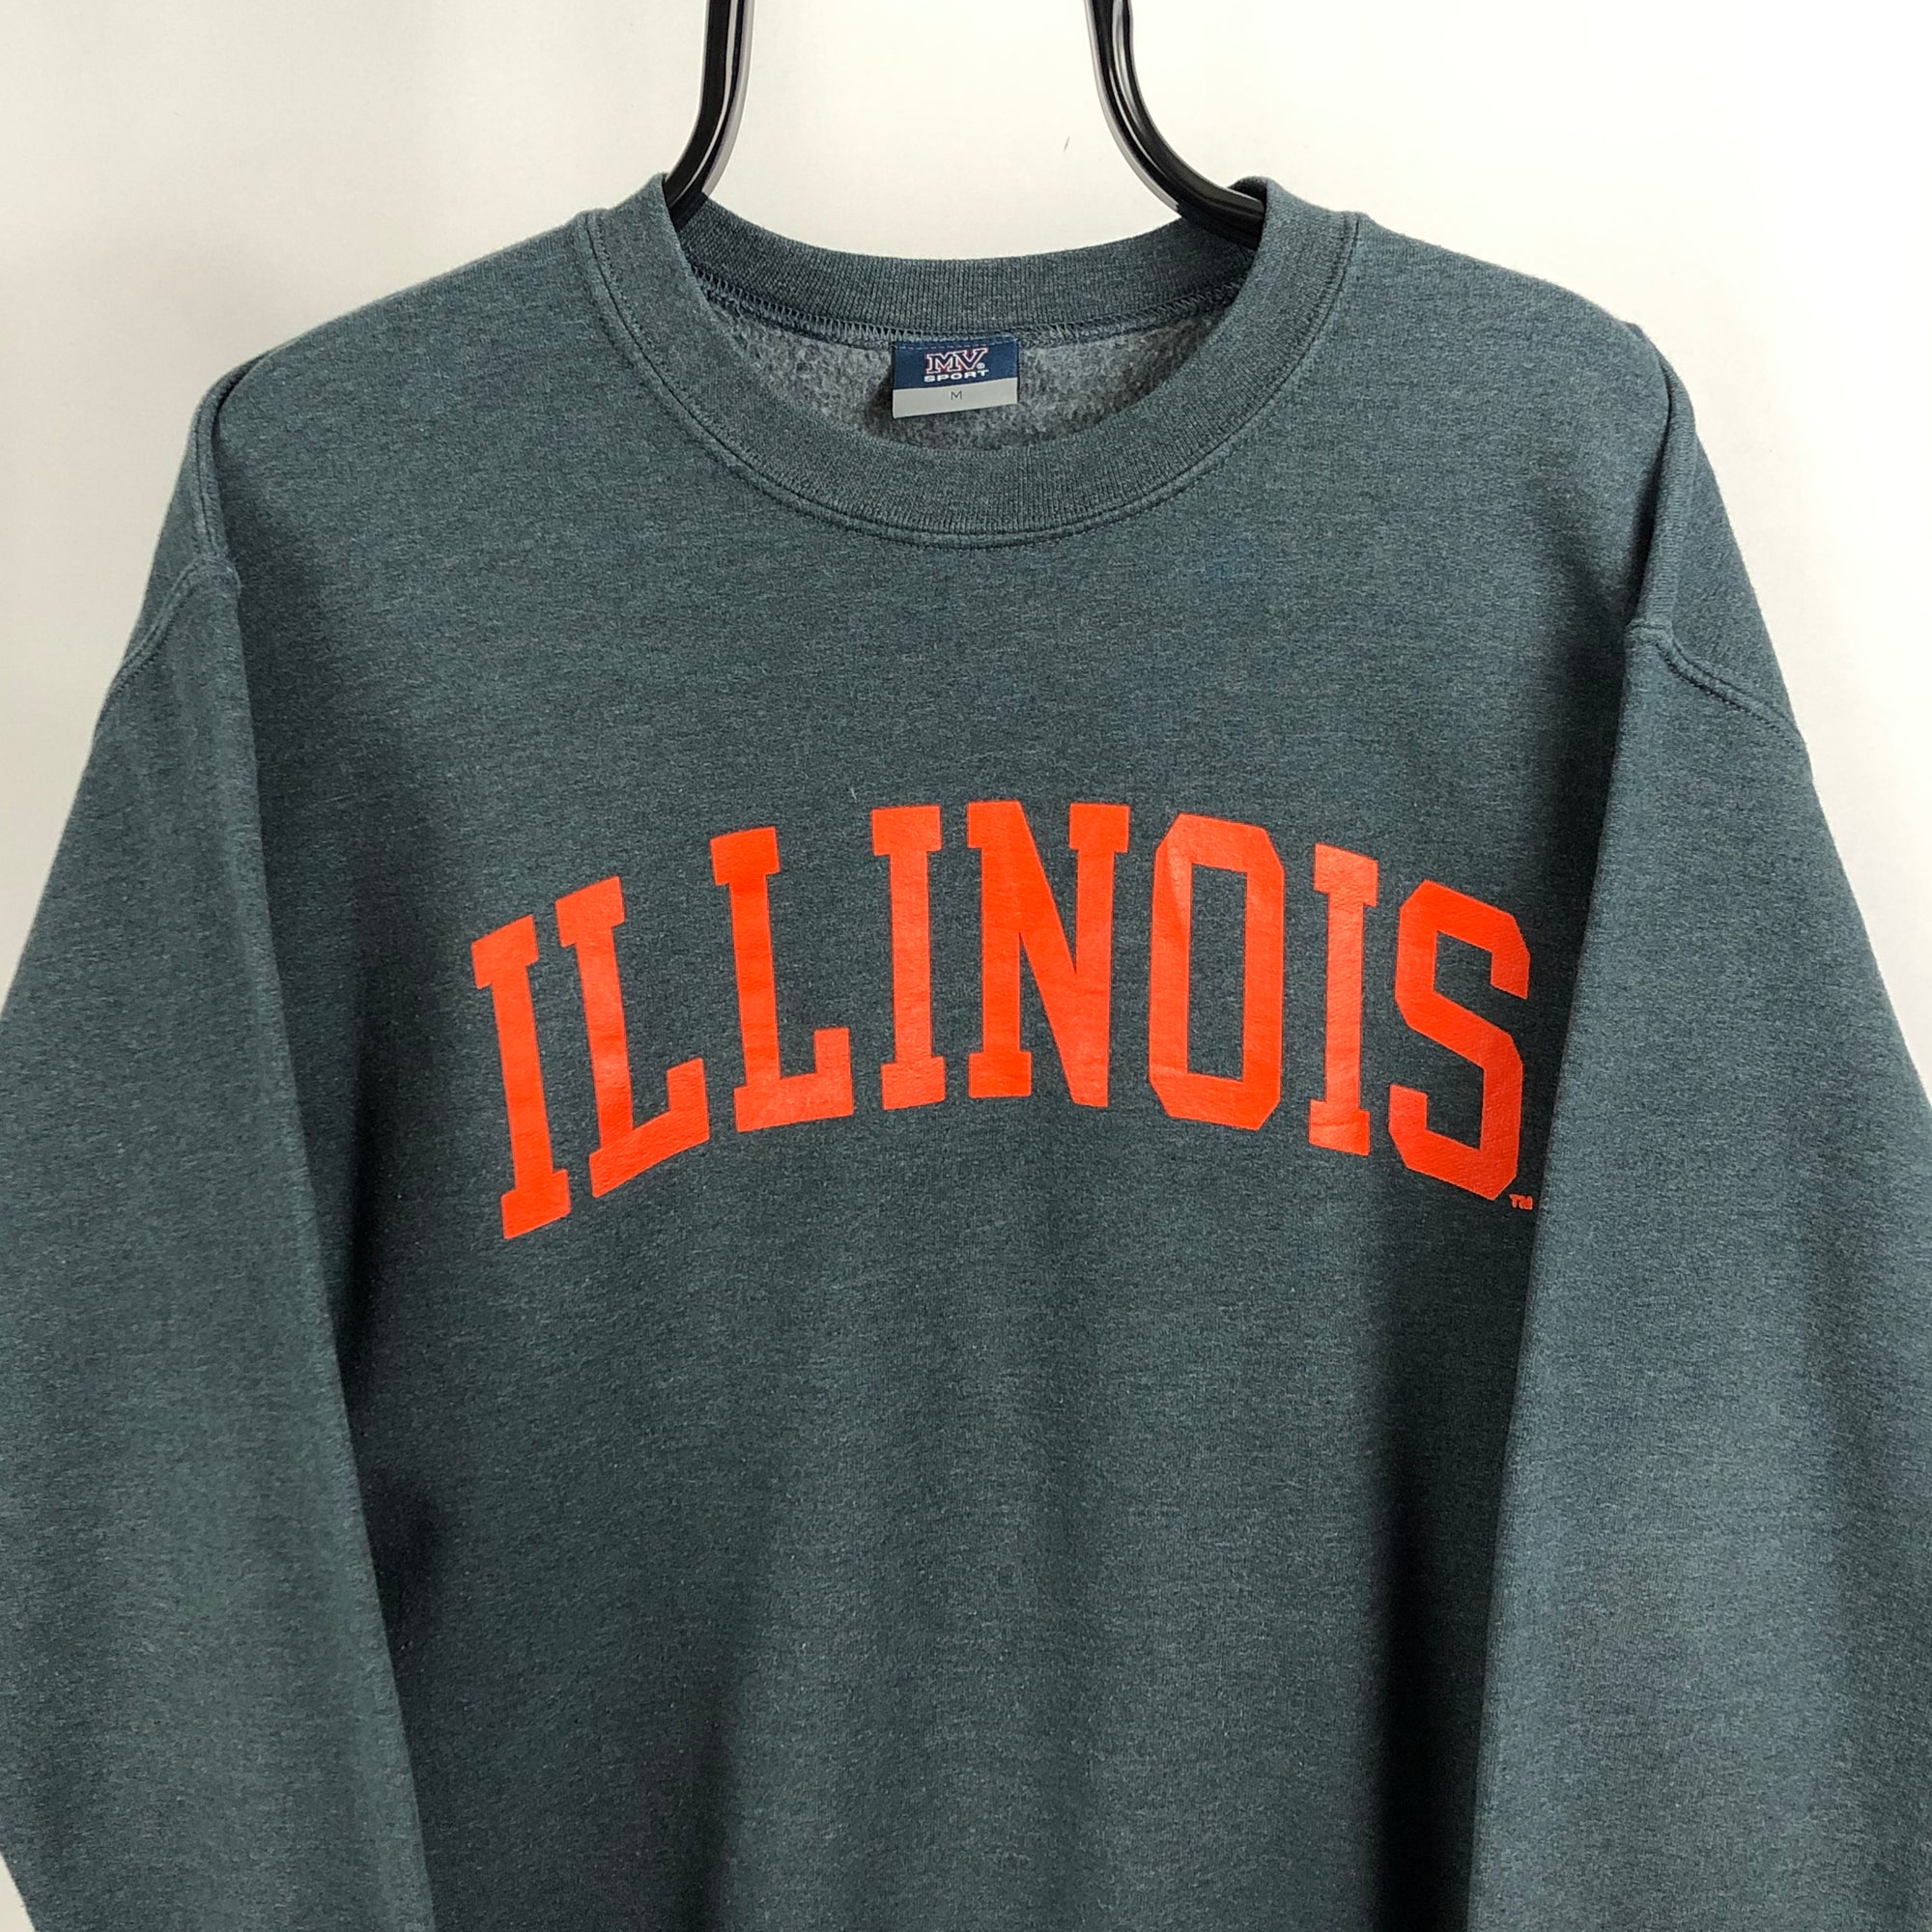 Vintage Illinois Sweatshirt in Grey/Orange - Men's Medium/Women's Large